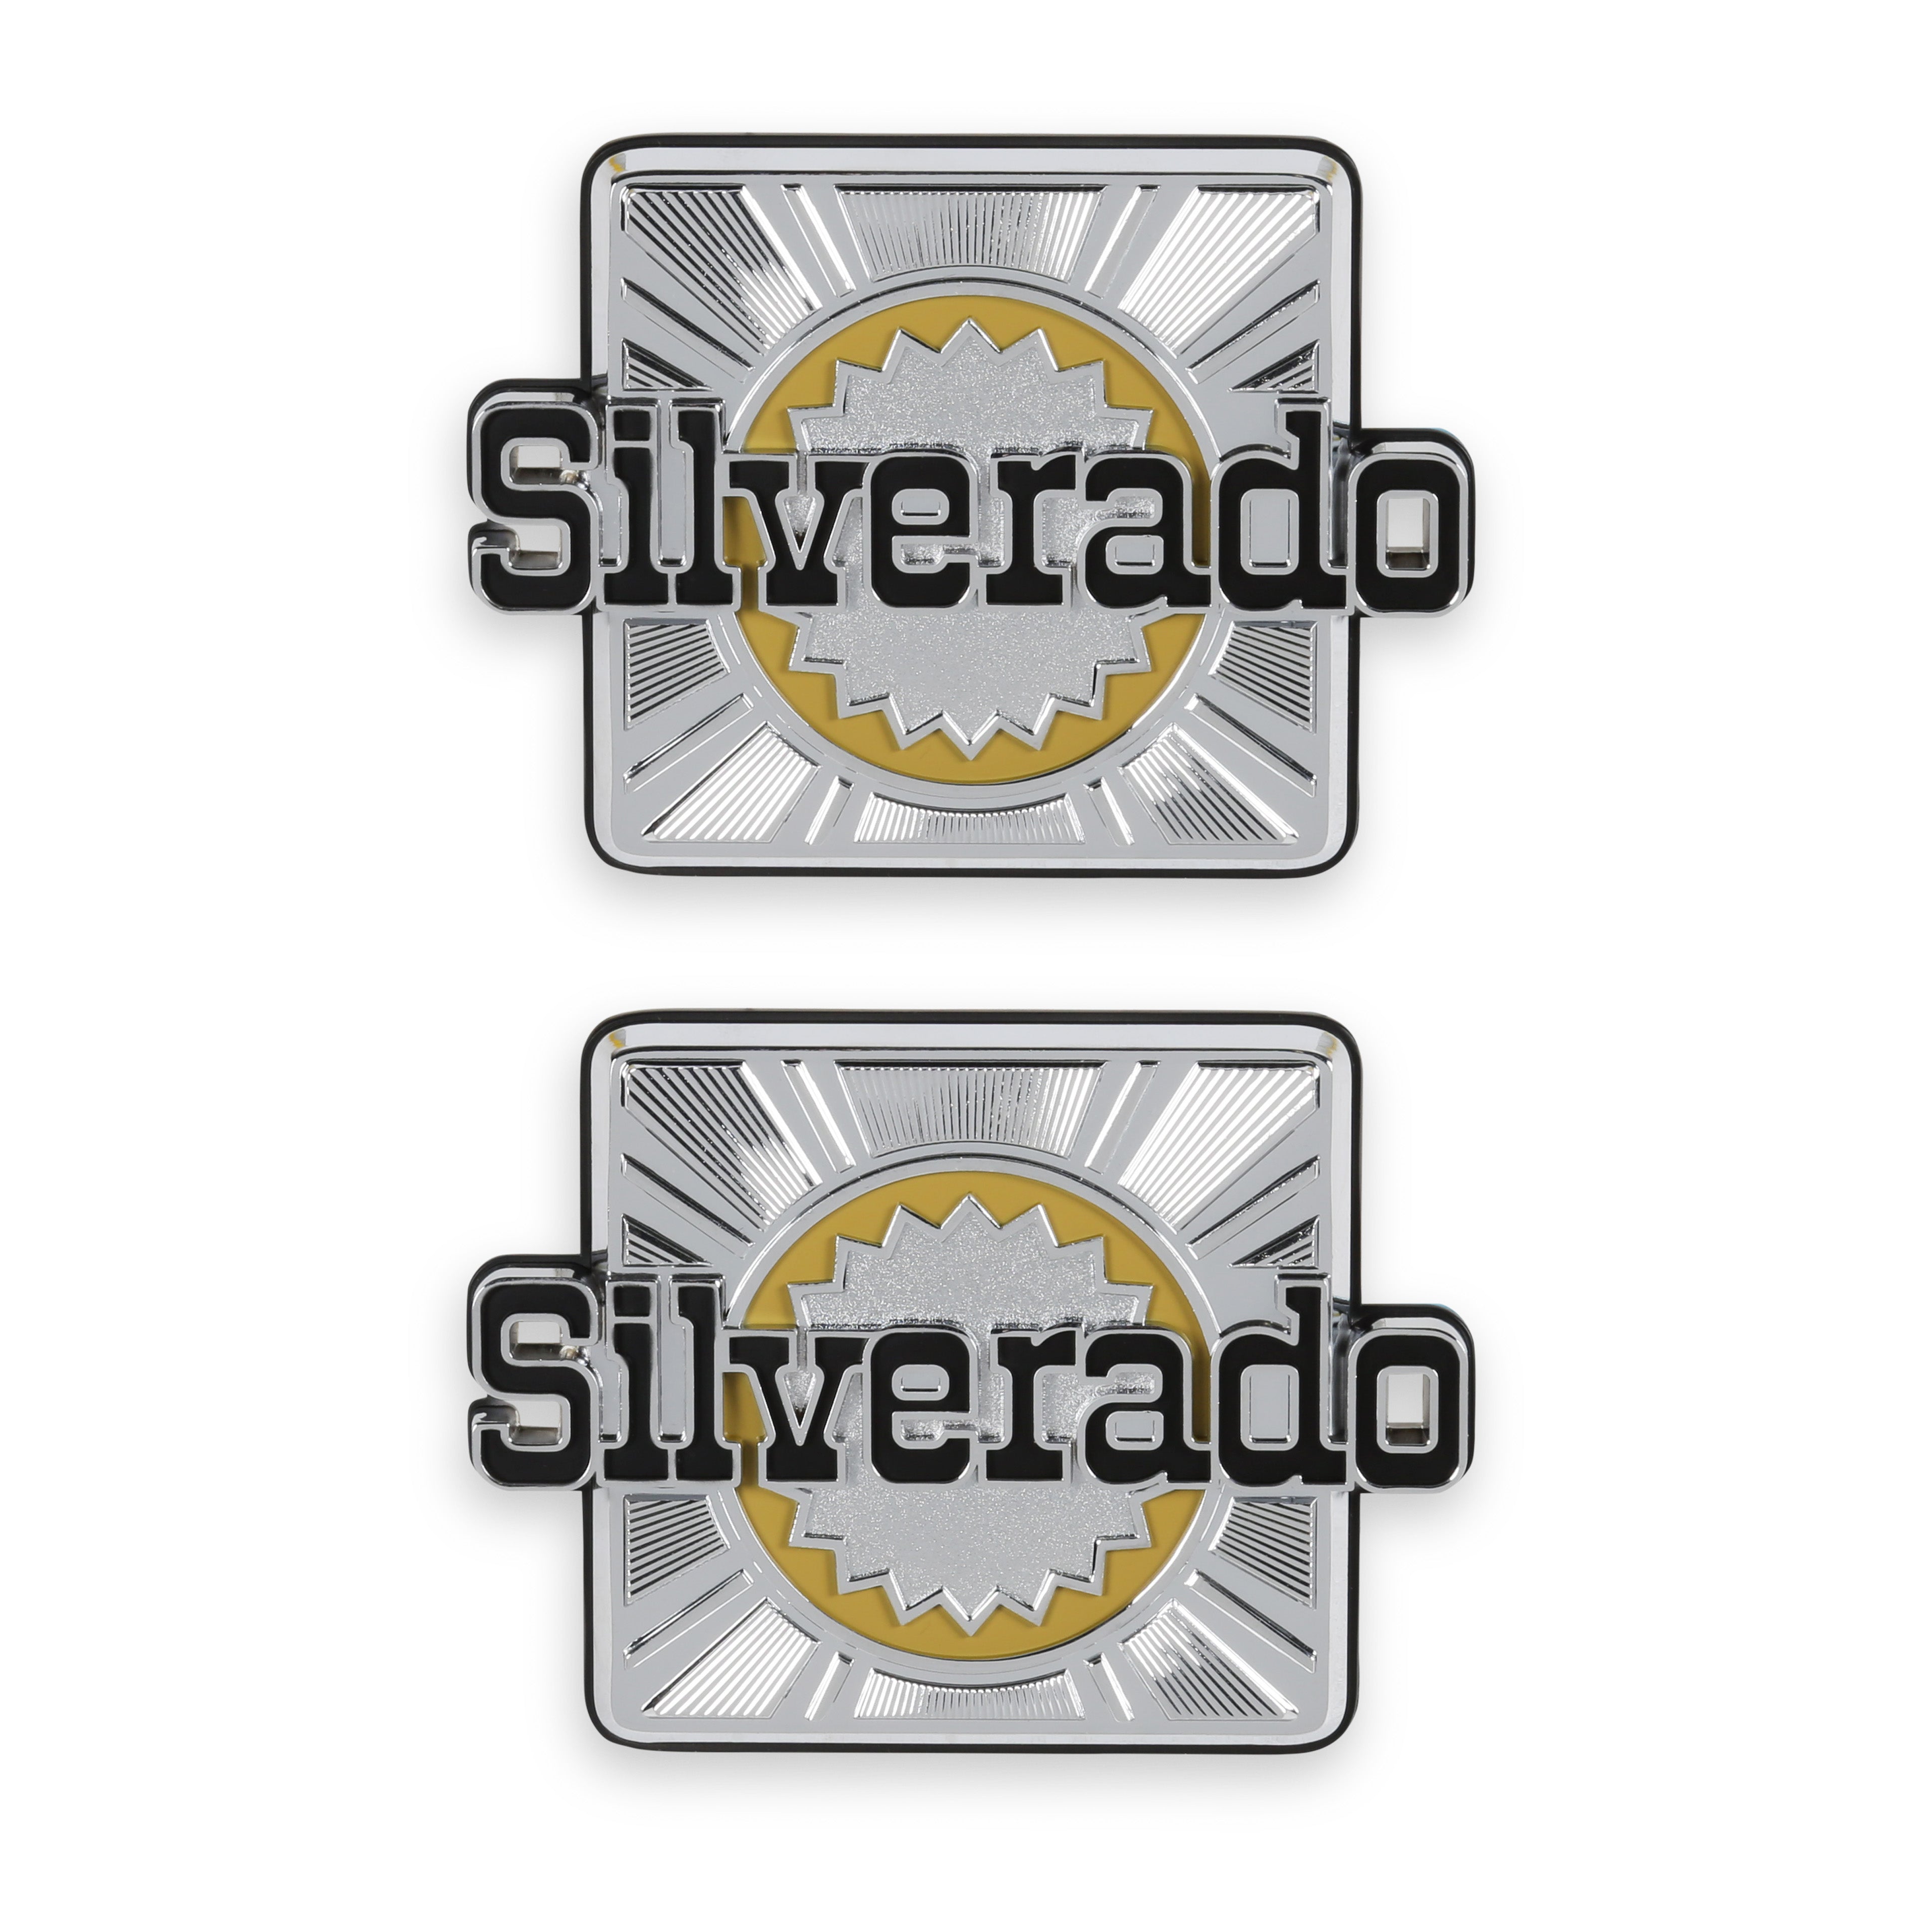 BROTHERS K5 Rear Side Emblem Pair - Silverado pn 04-549